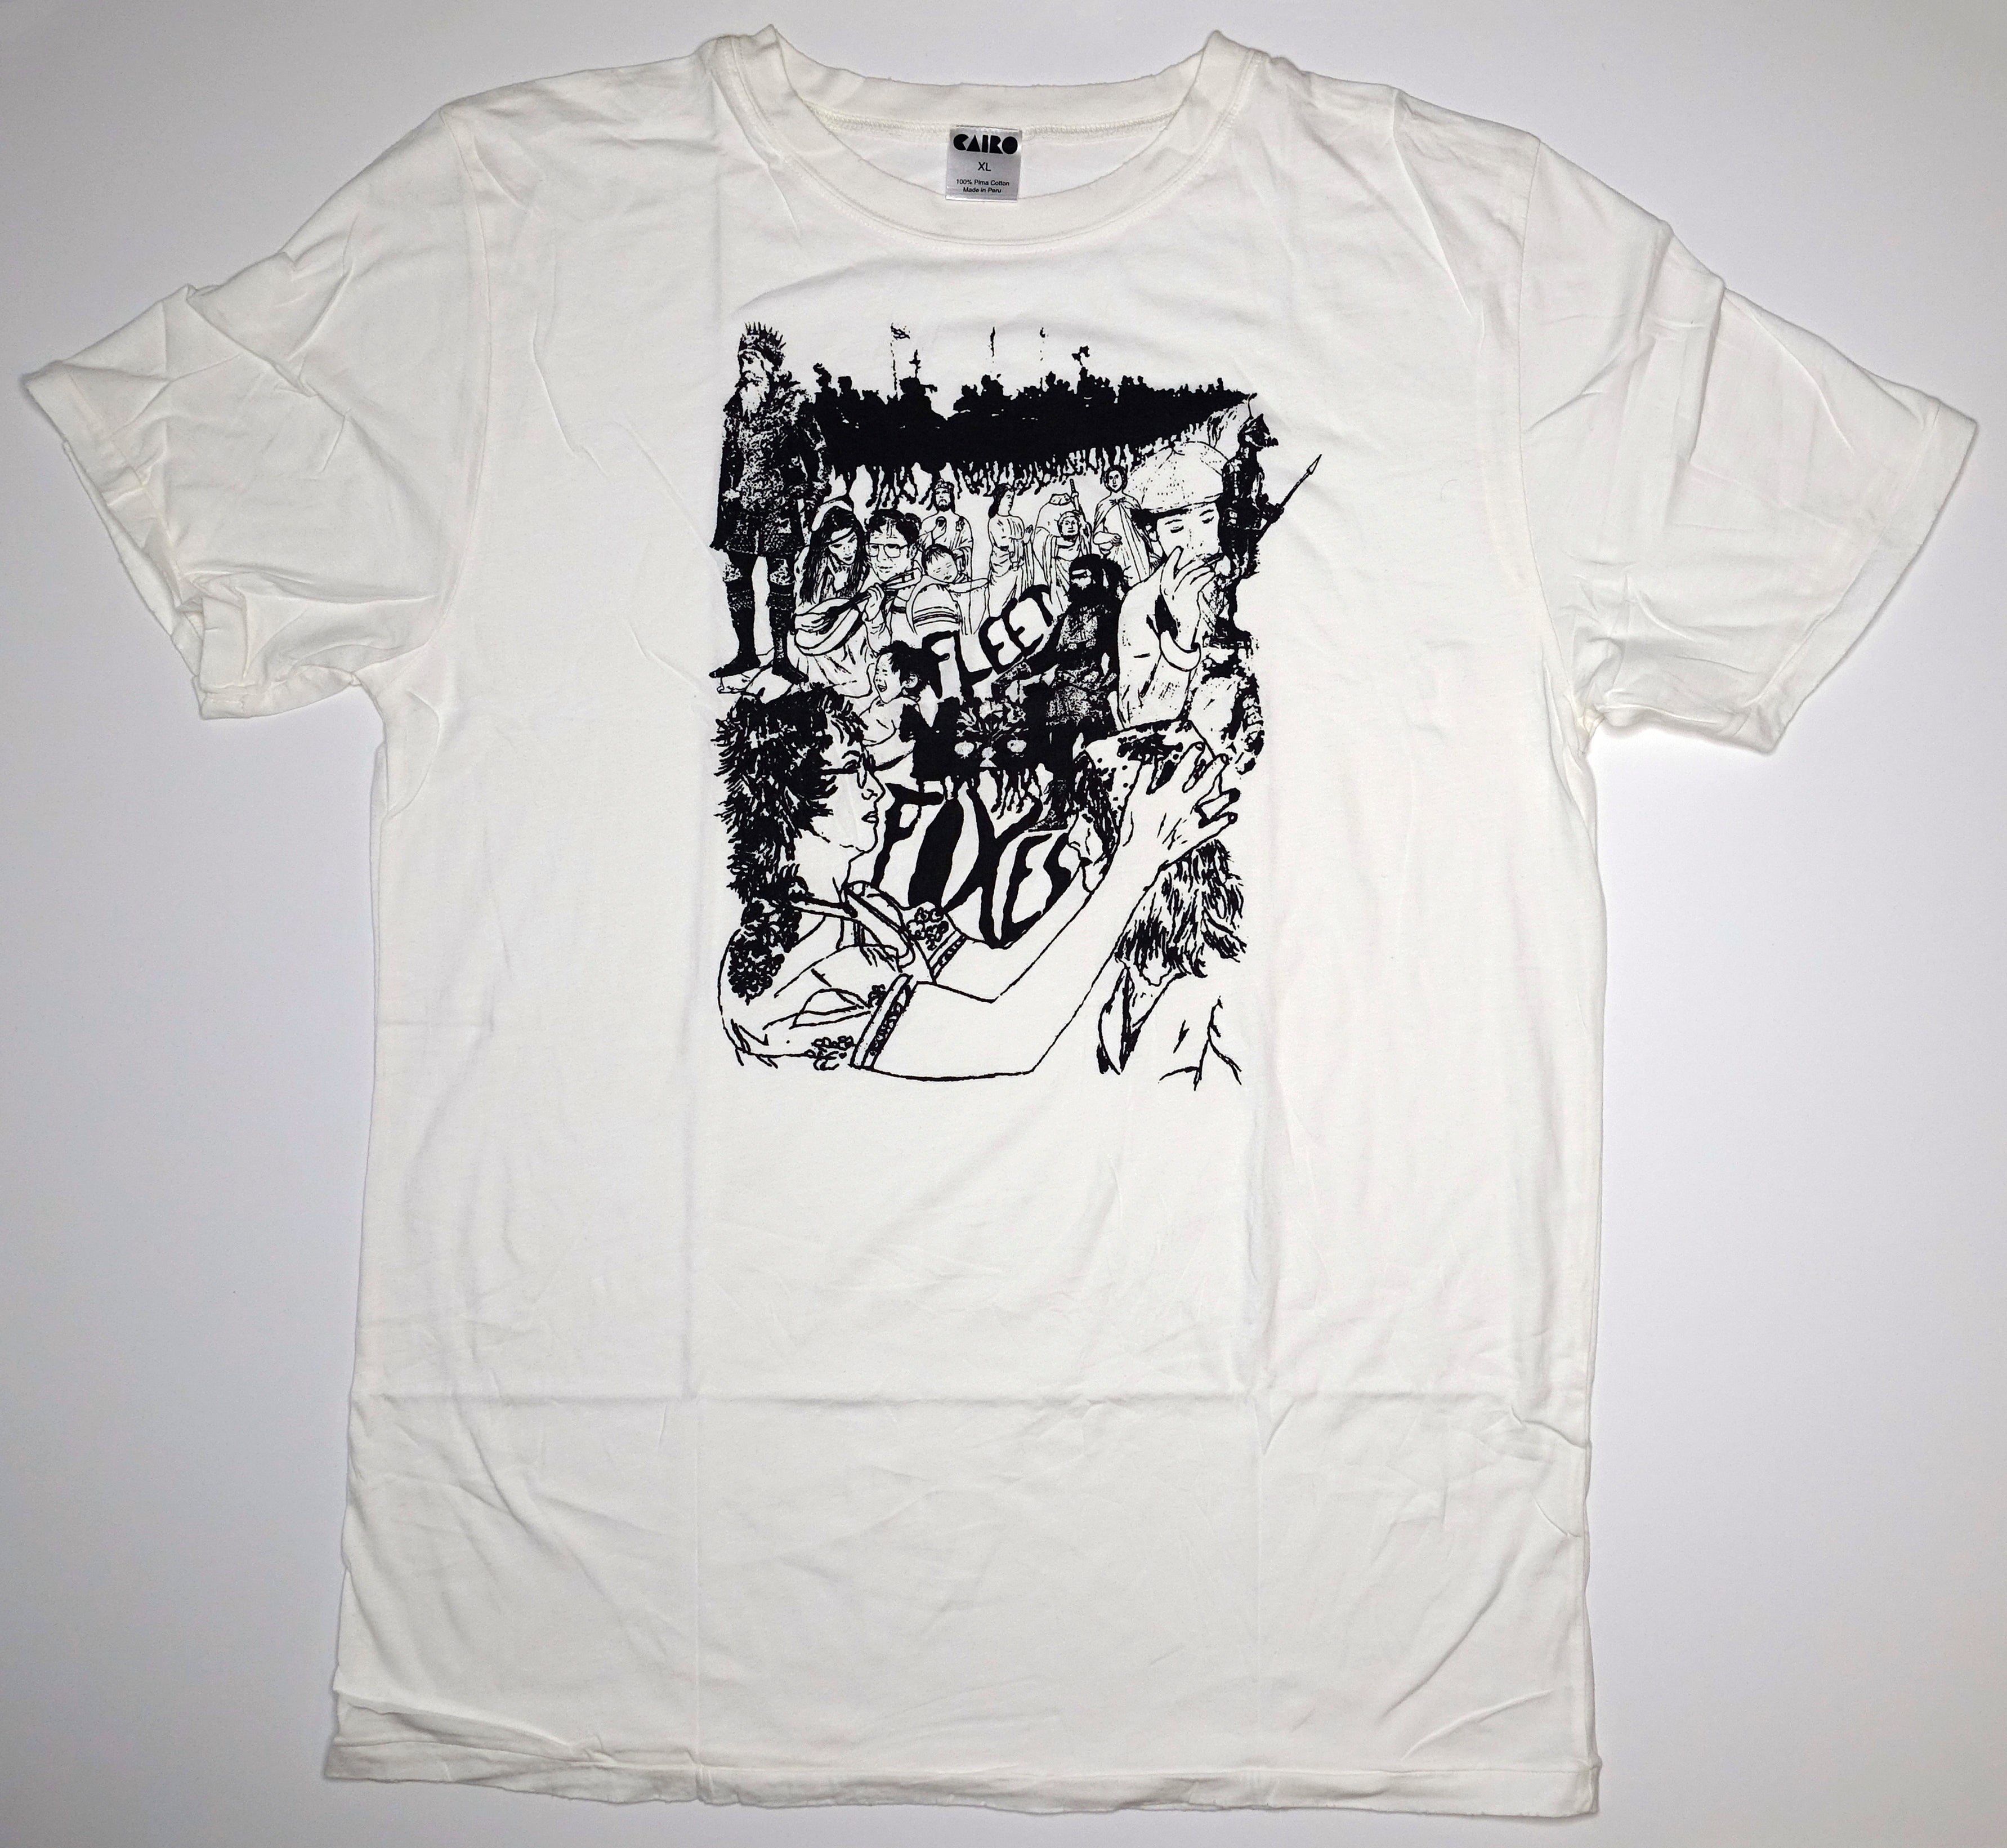 Fleet Foxes - Drawing 2011 Tour Shirt Size XL